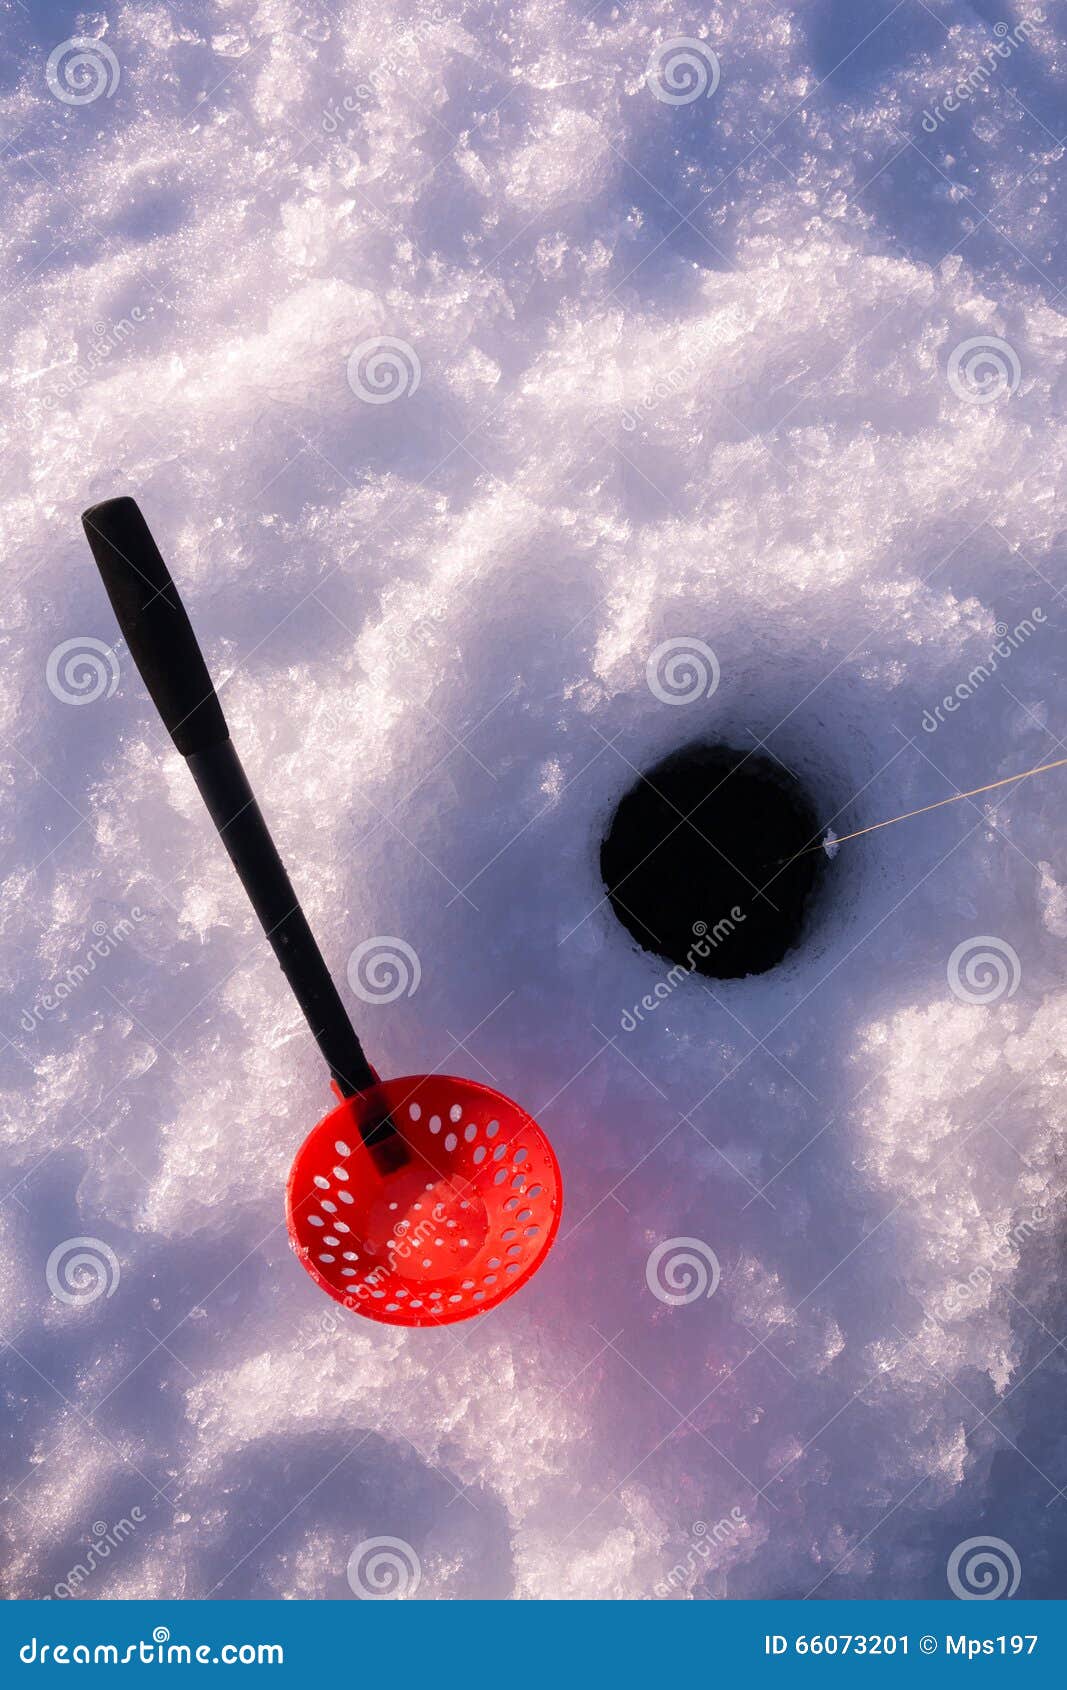 https://thumbs.dreamstime.com/z/ice-fishing-hole-scoop-removing-slush-line-plastic-ladle-66073201.jpg